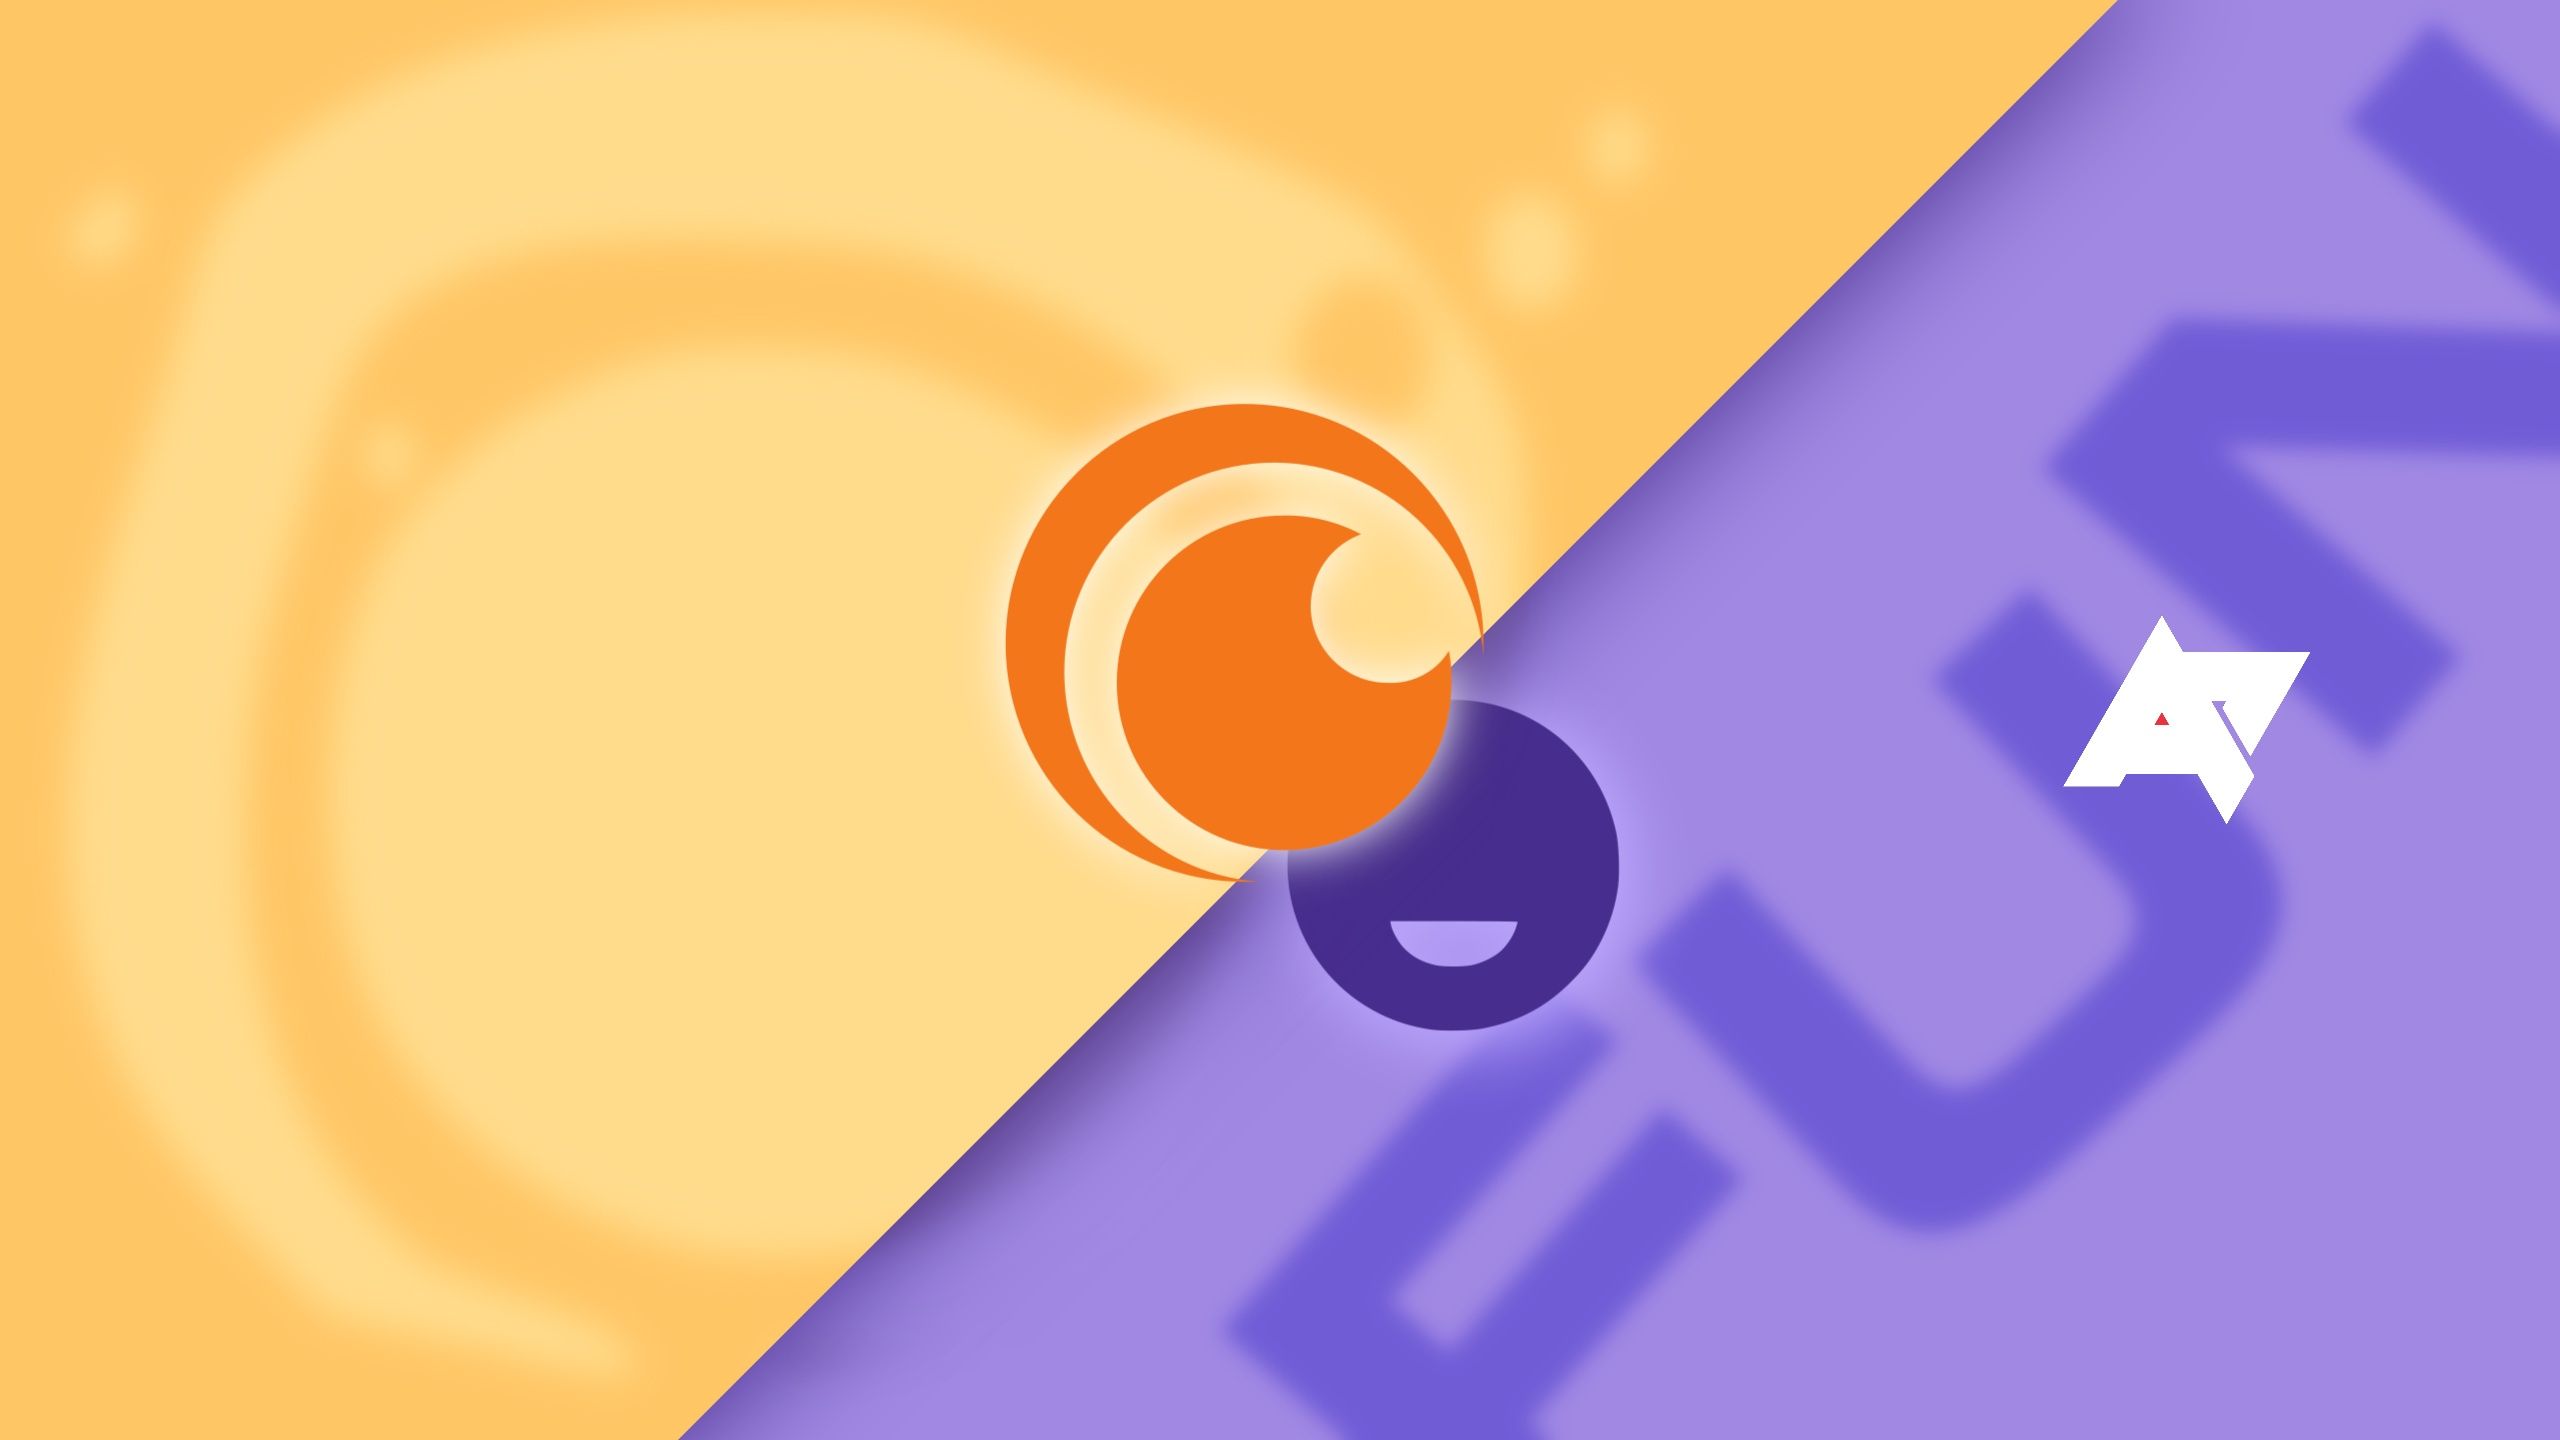 crunchyroll and funimation logoa with AP logo